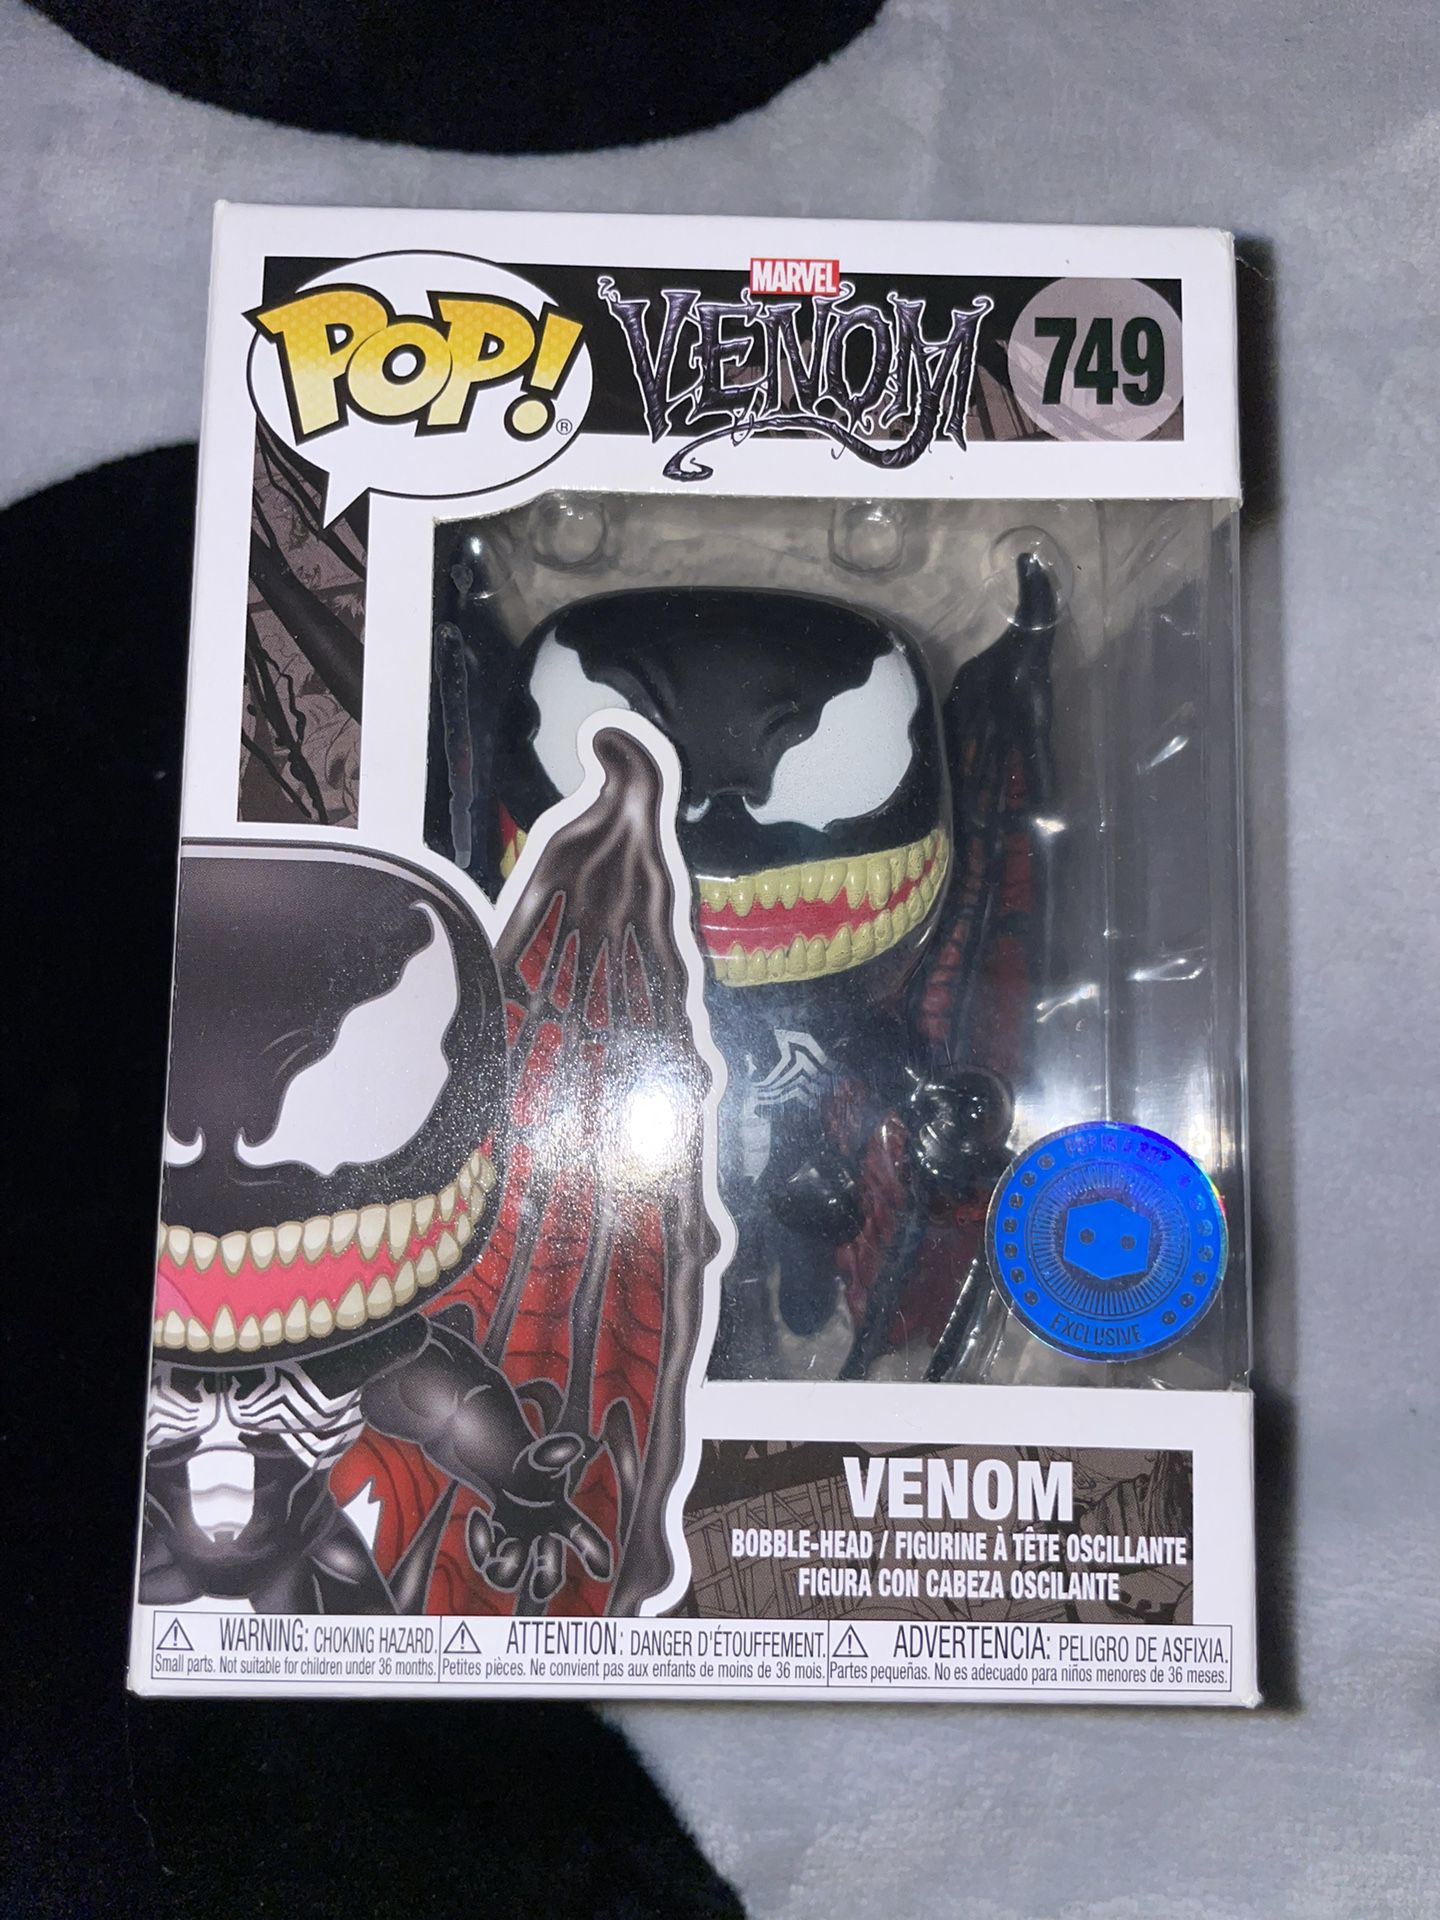 Venom Funko Pop